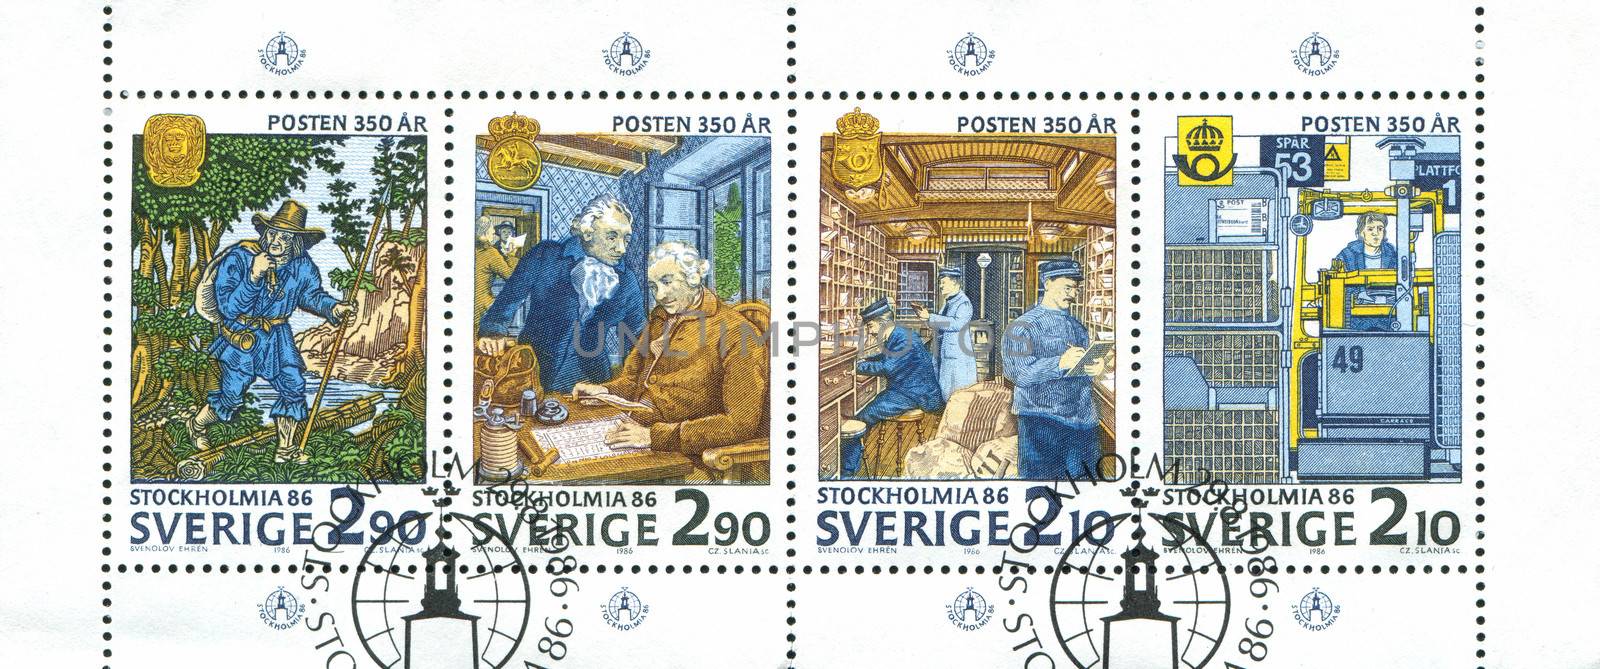 SWEDEN - CIRCA 1986: stamp printed by Sweden, shows Postman, circa 1986